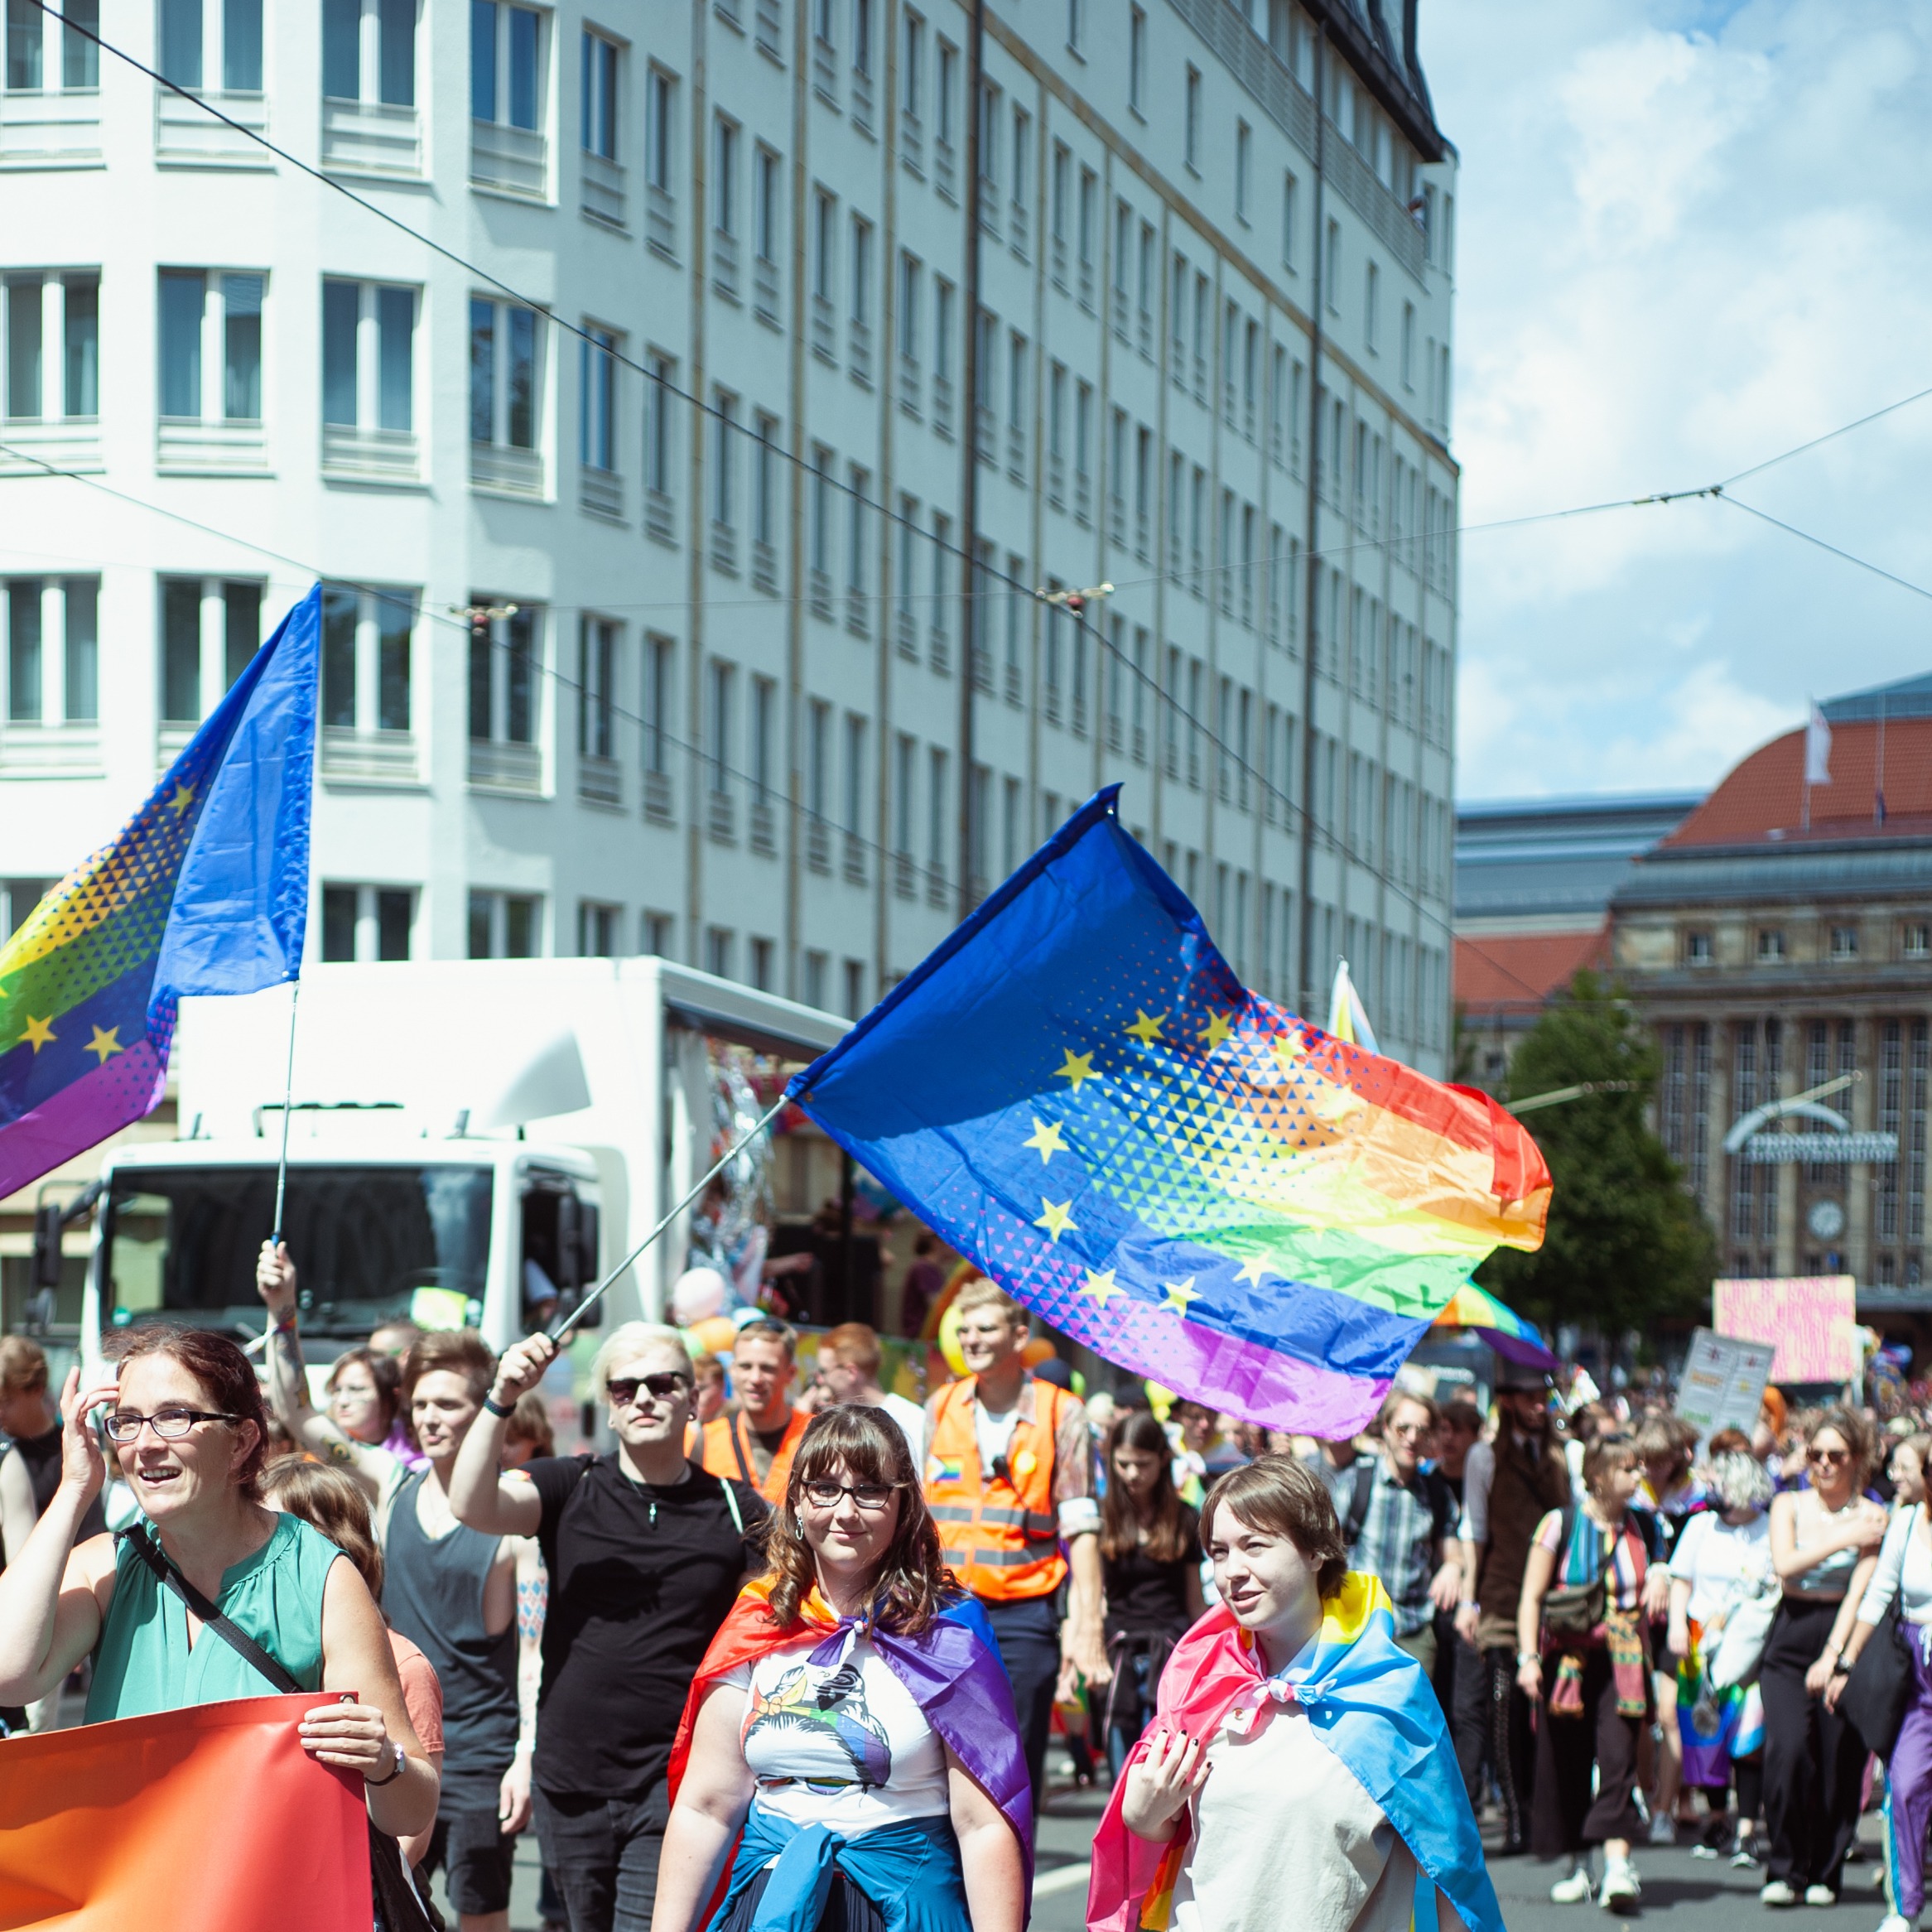 Bei der CSD-Demo werden regenbogenfarbene EU-Flaggen geschwenkt.